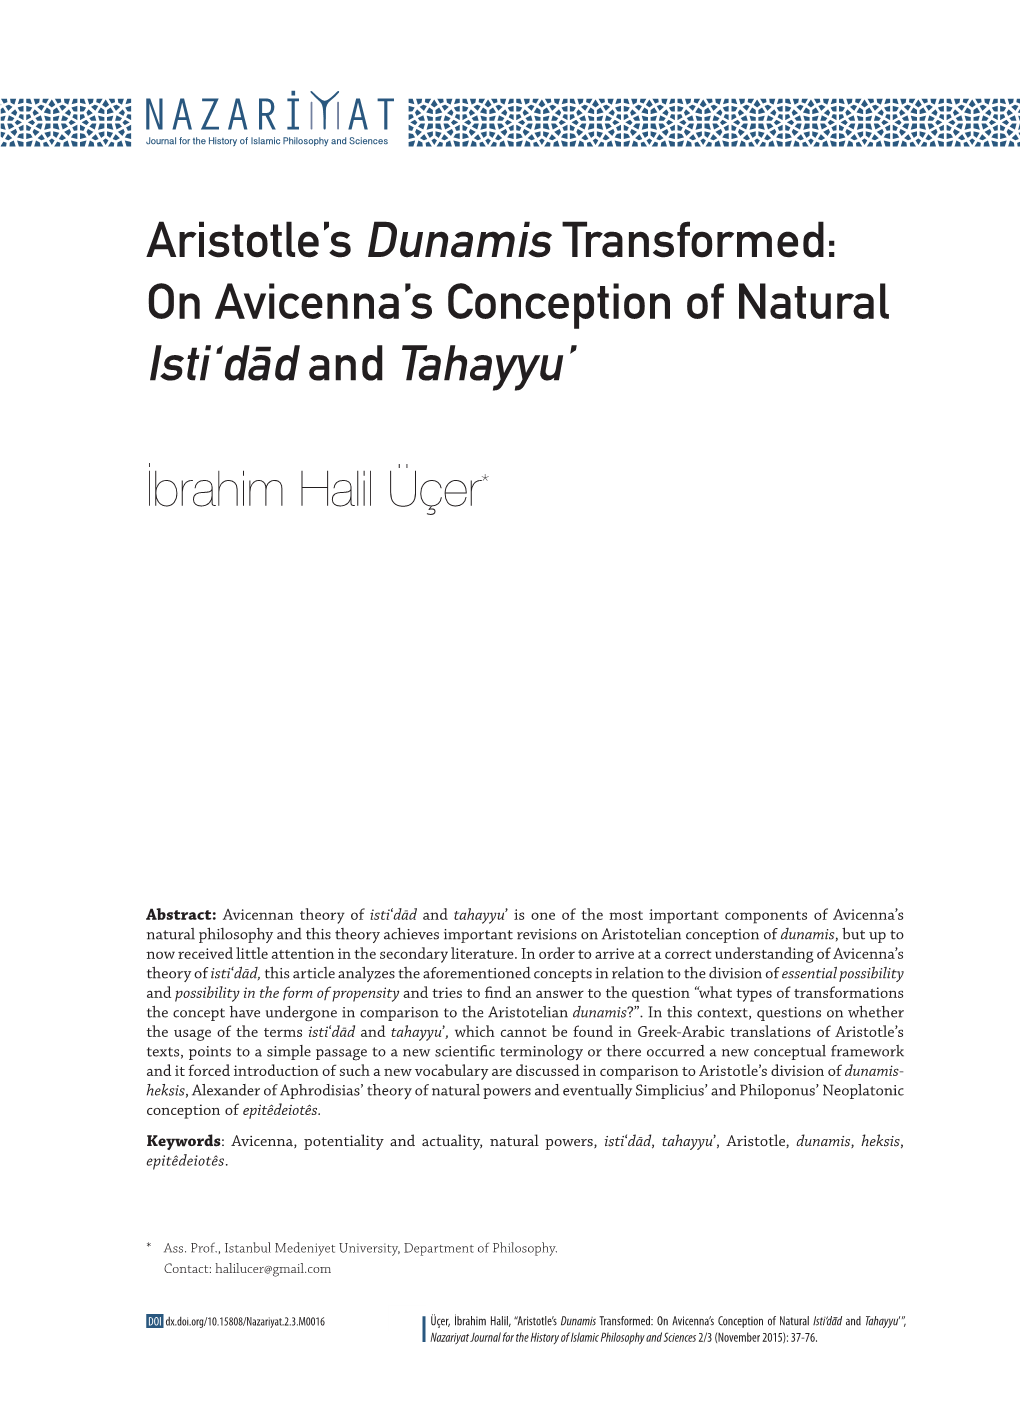 Aristotle's Dunamis Transformed